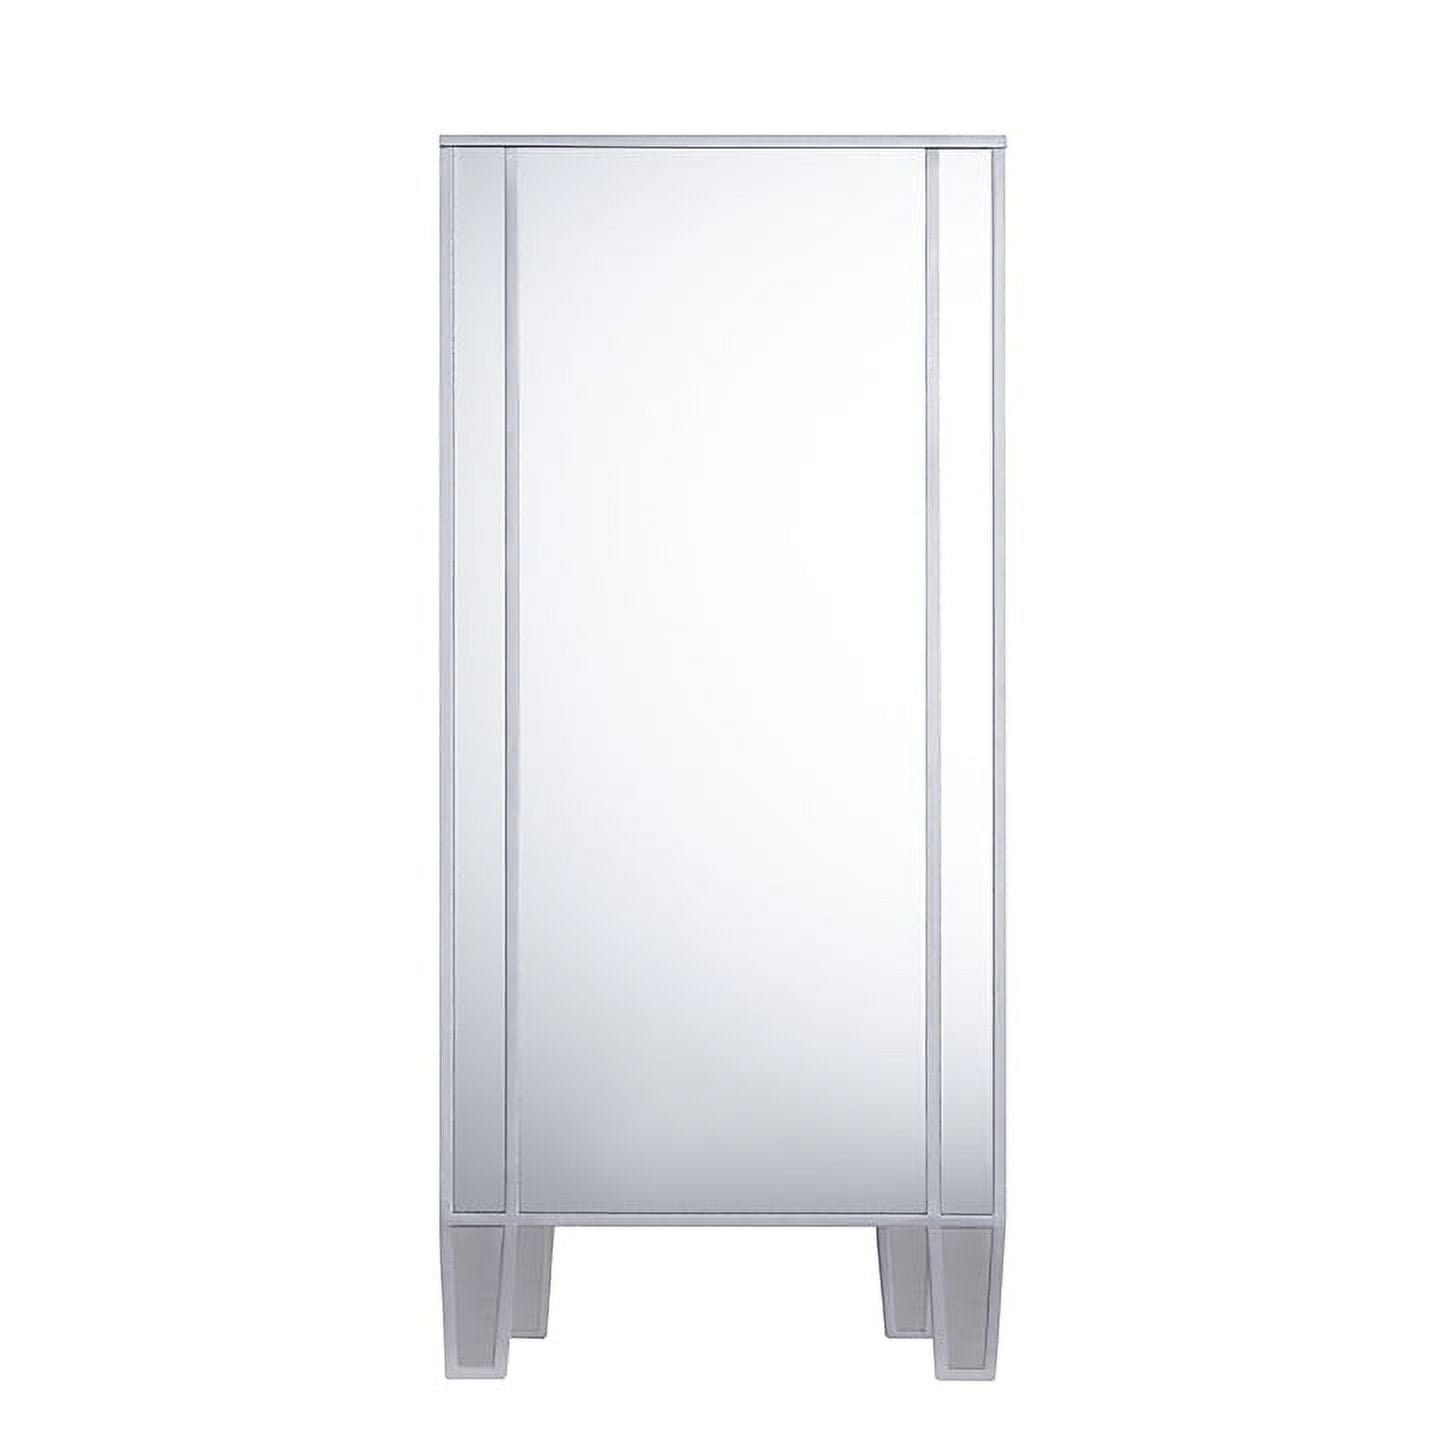 SEI Furniture Mirage 3-Drawer Mirrored Cabinet 50.25 x 35.25